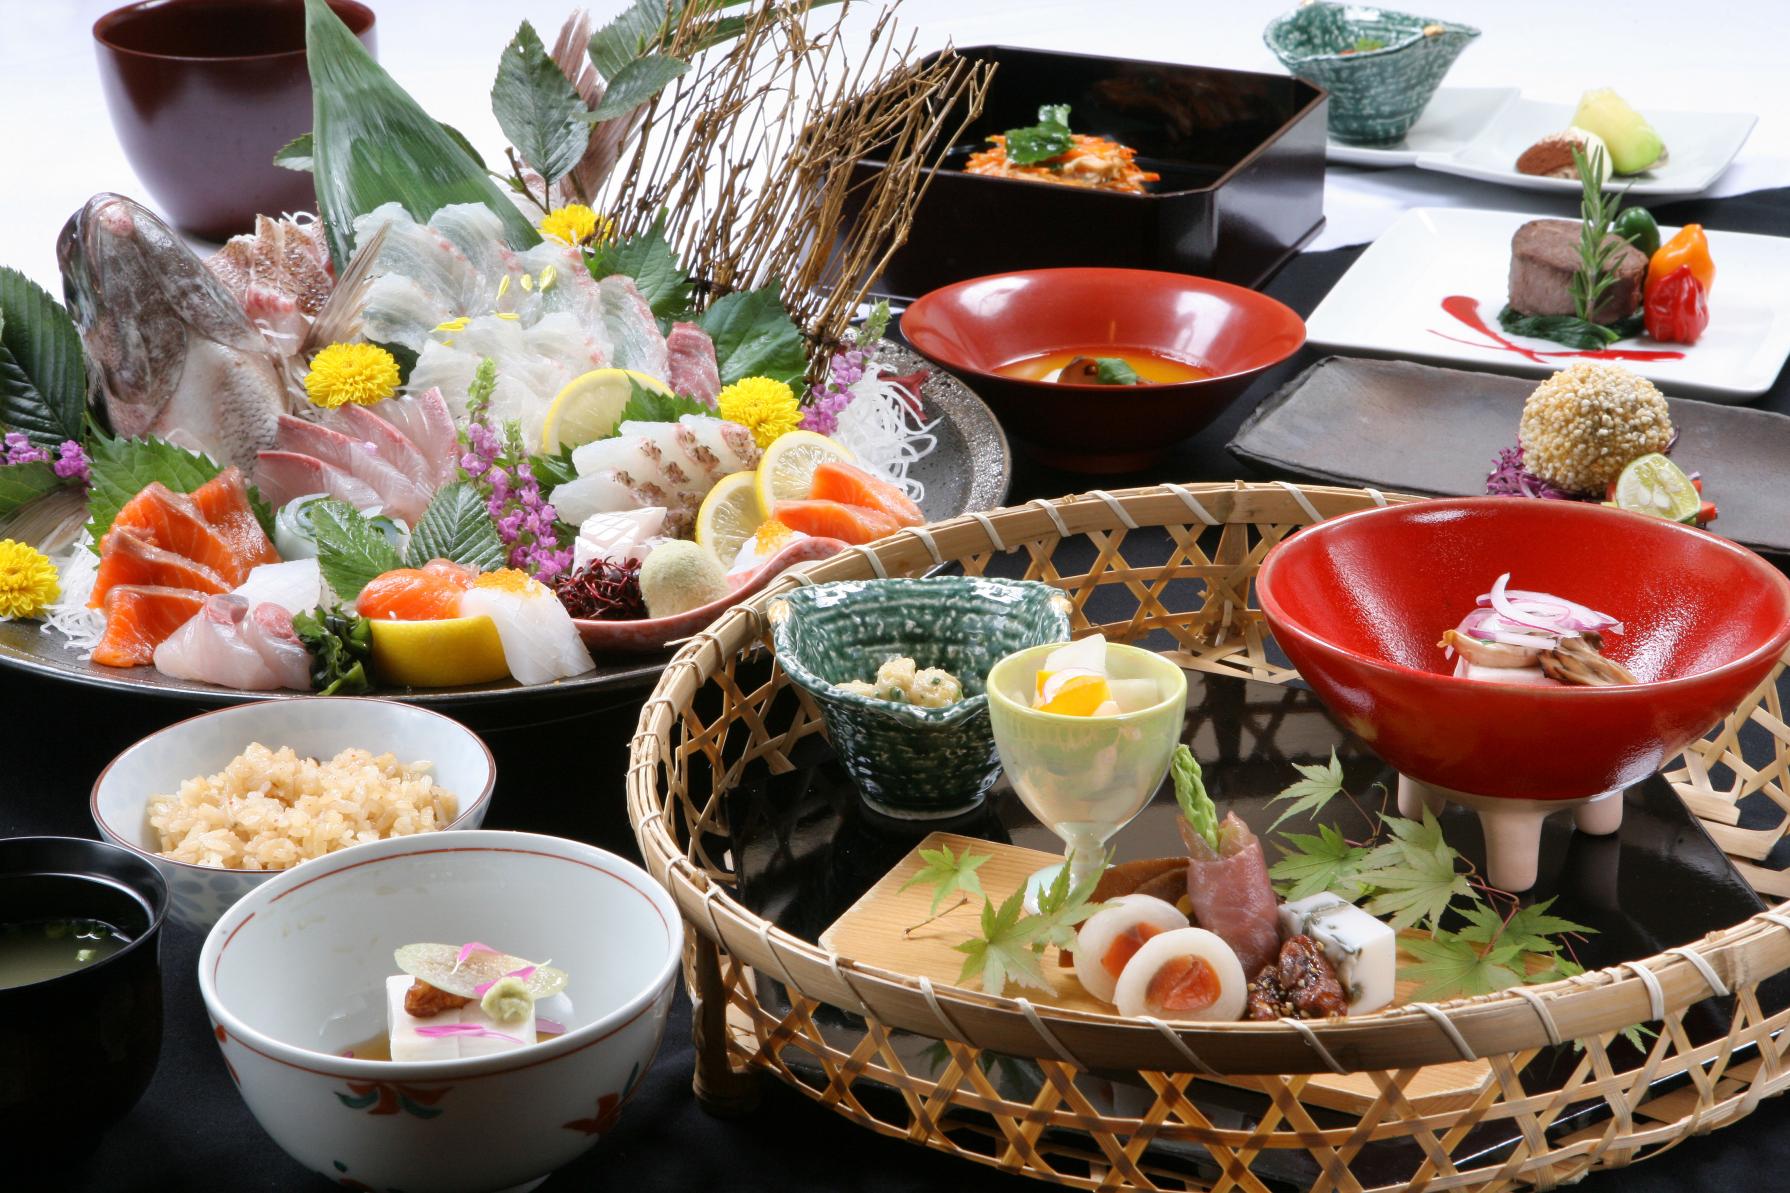 Enjoy a buffet of natural food and the amazing views of Dazaifu from outdoor baths at Chikushino Tenpai-no-Yu-6